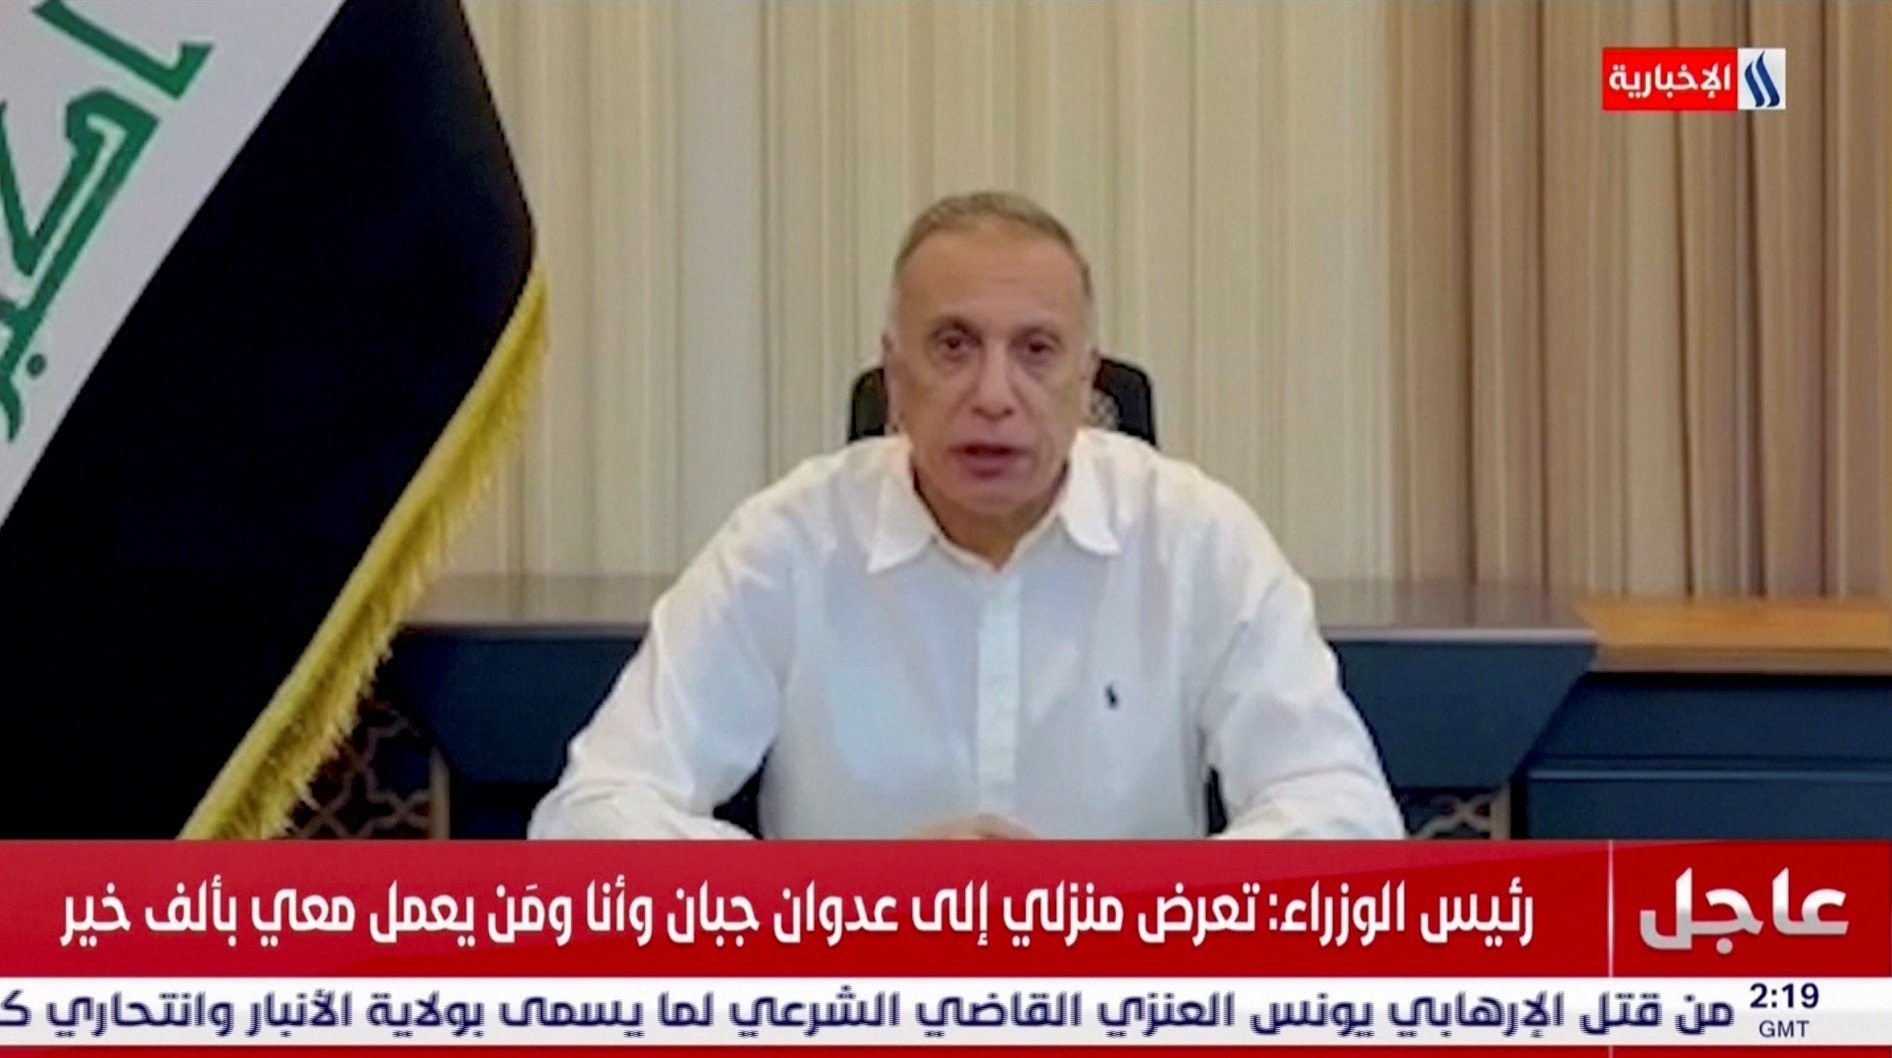 Iraqi Prime Minister Mustafa Al-Kadhimi addresses the nation following a drone strike targeted his residence in Baghdad, Iraq, Nov. 7, 2021. (Al-Iraqiya via Reuters)